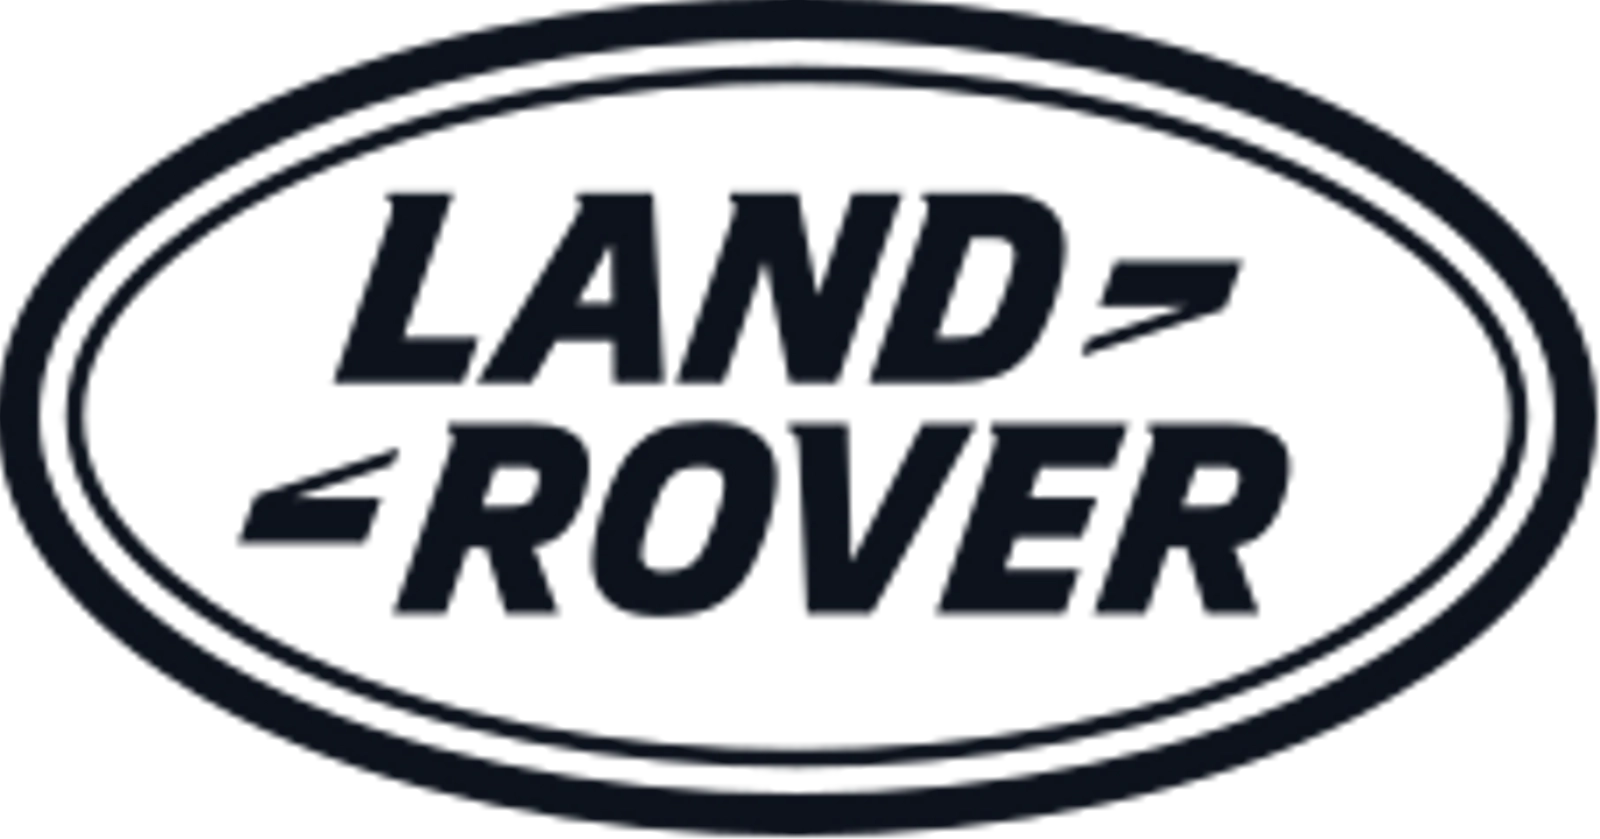 логотип Land Rover